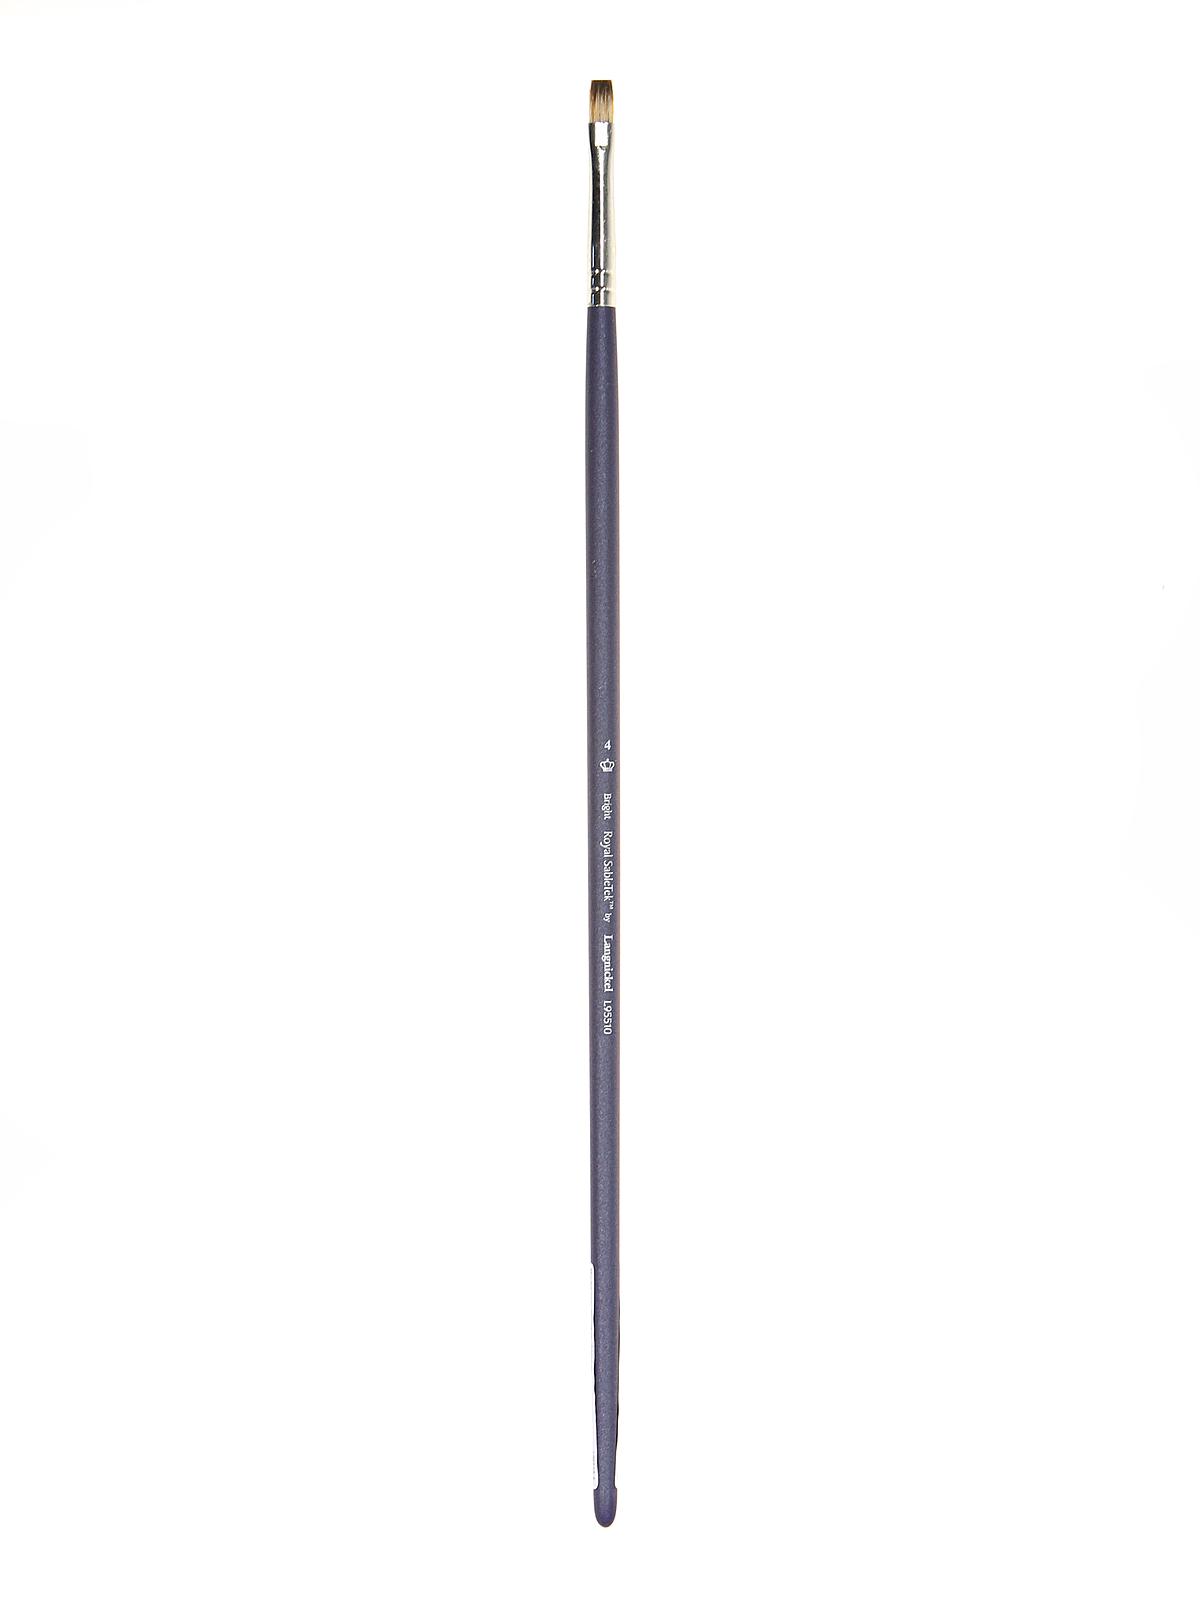 Sabletek Brushes Long Handle 4 Bright L95510